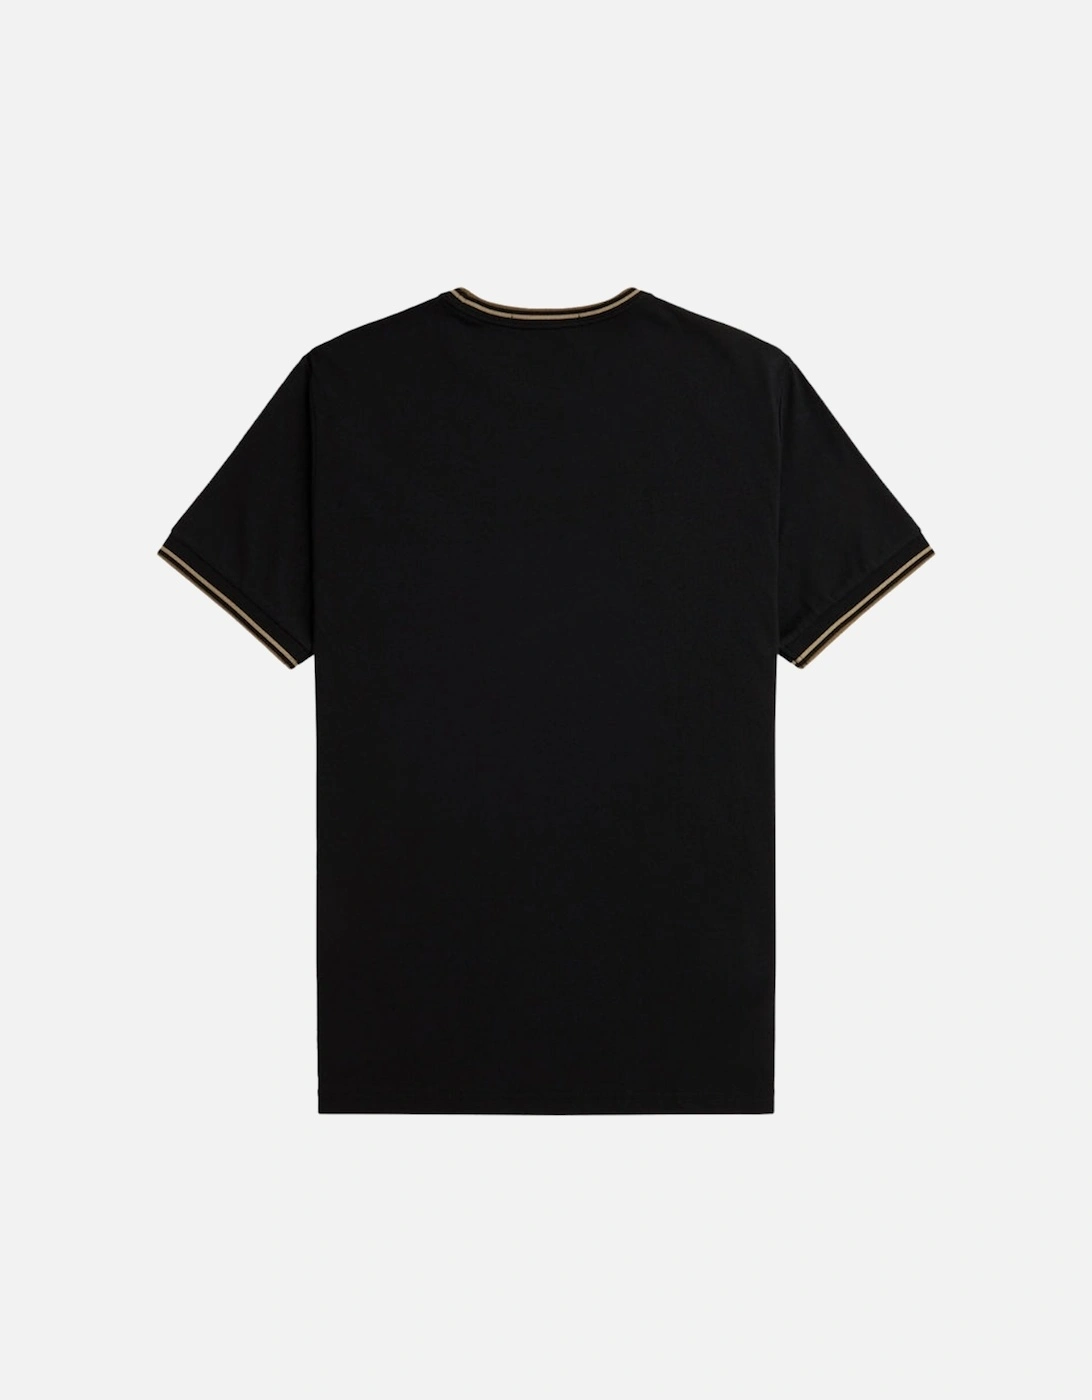 FP Twin Tipped T-Shirt - Black/Warm Stone